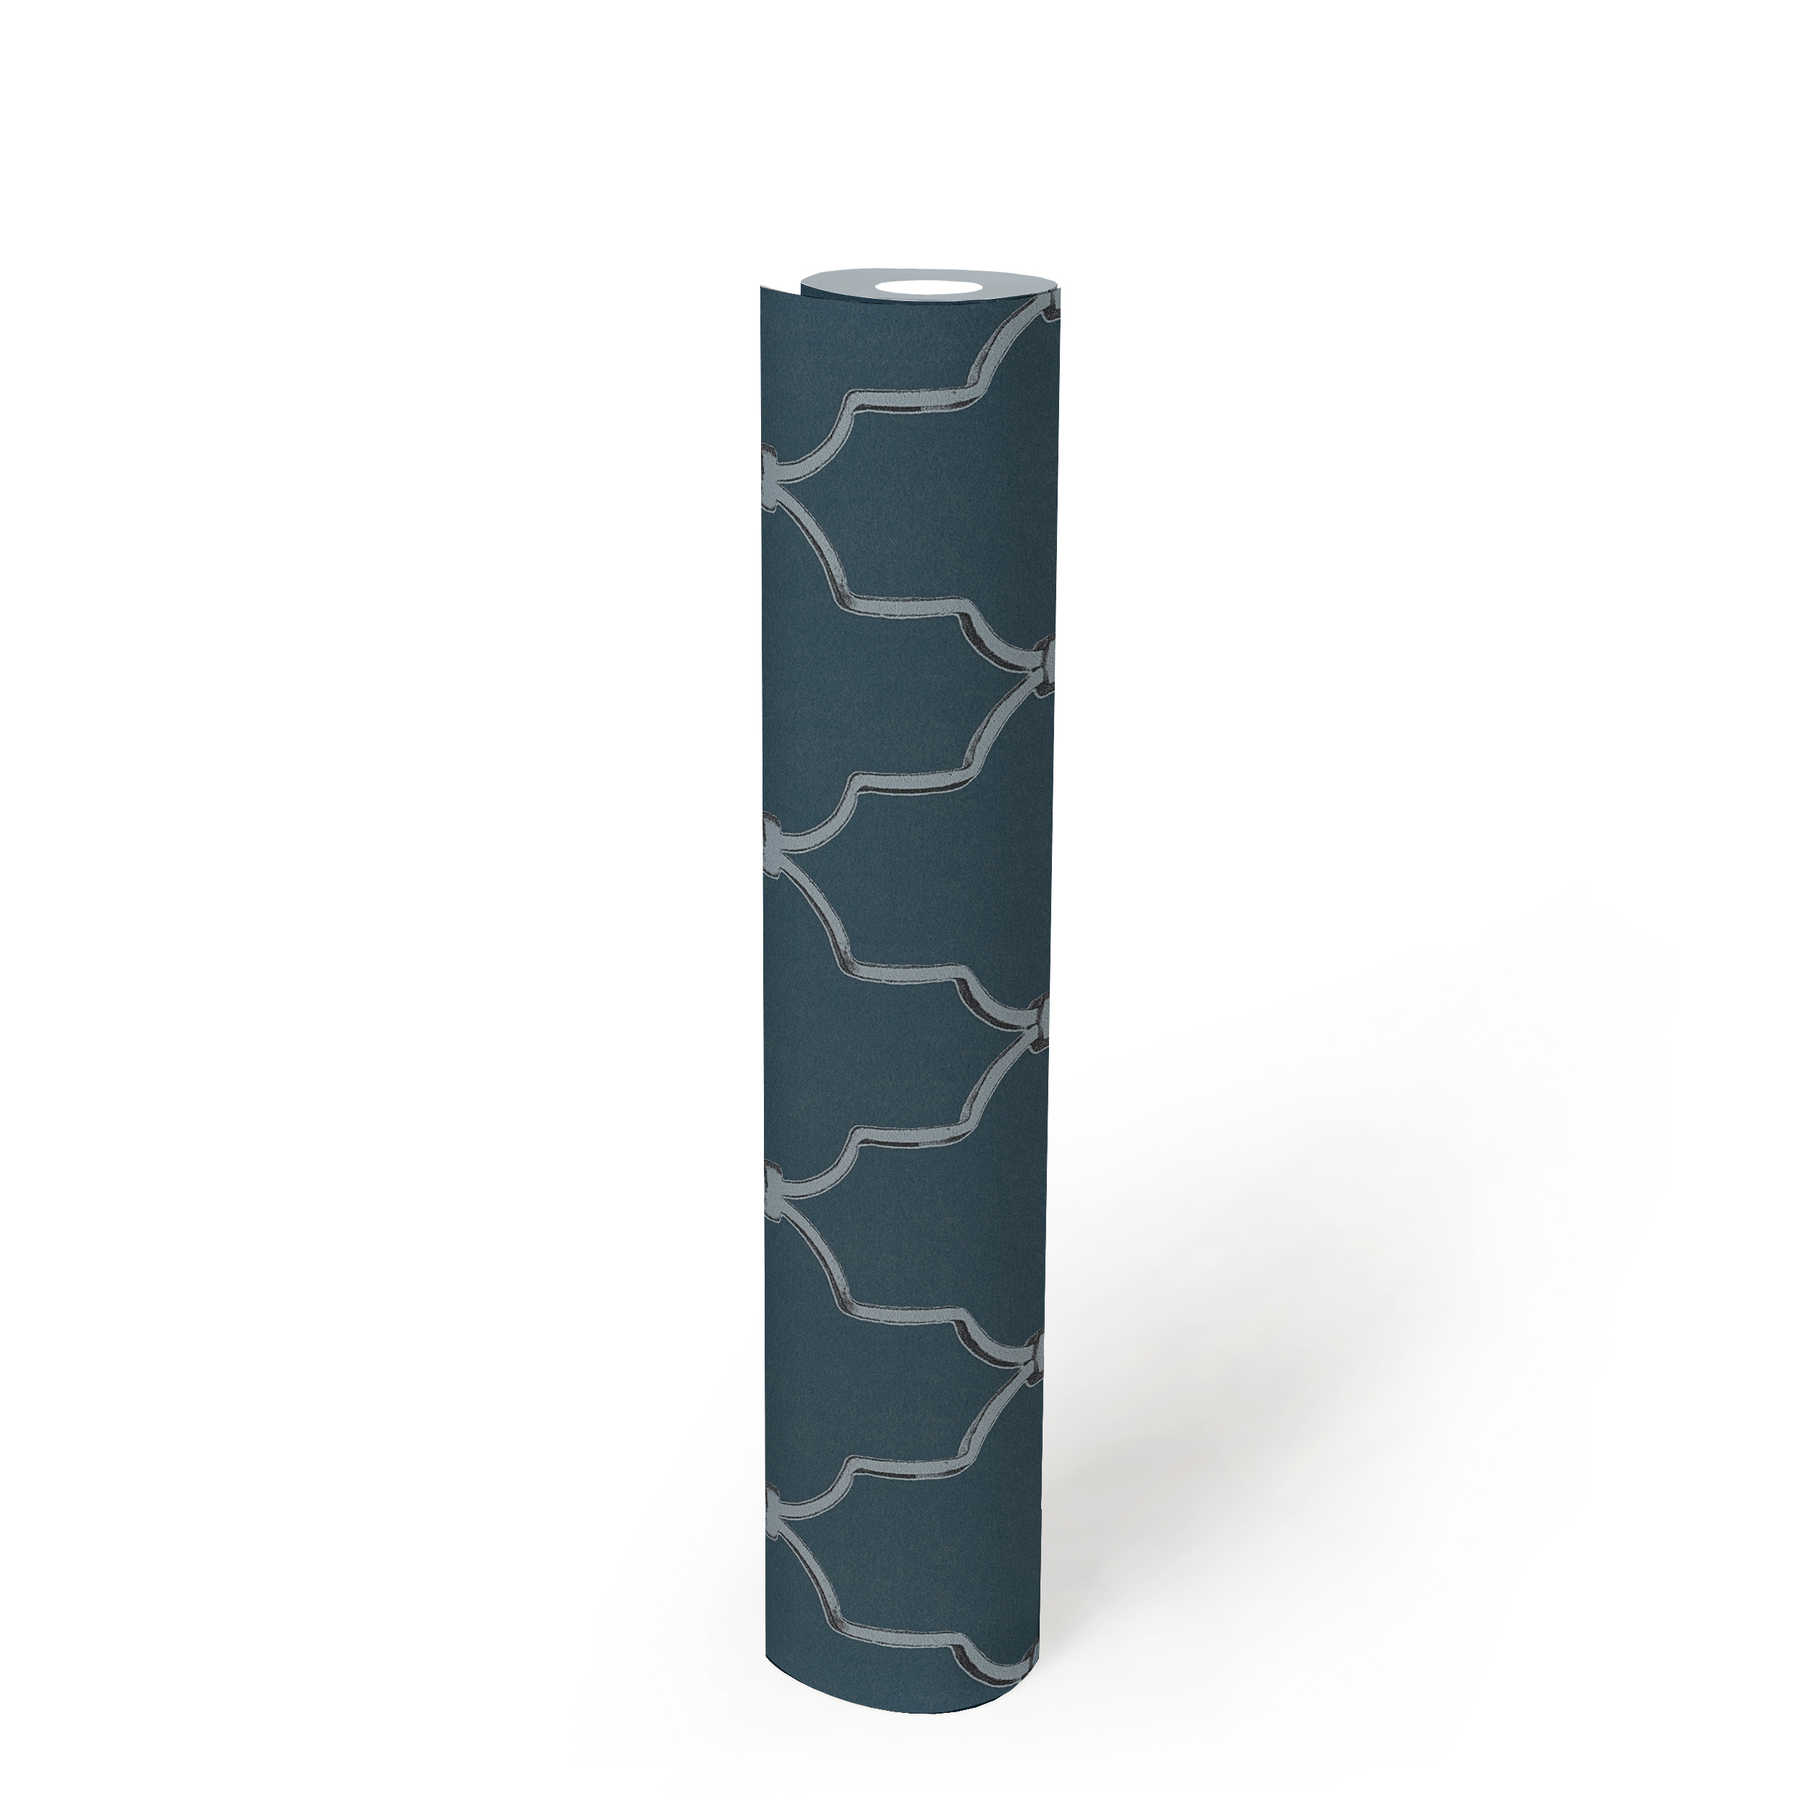             Art Deco Tapete 3D Muster & Metallic-Effekt – Blau, Grau
        